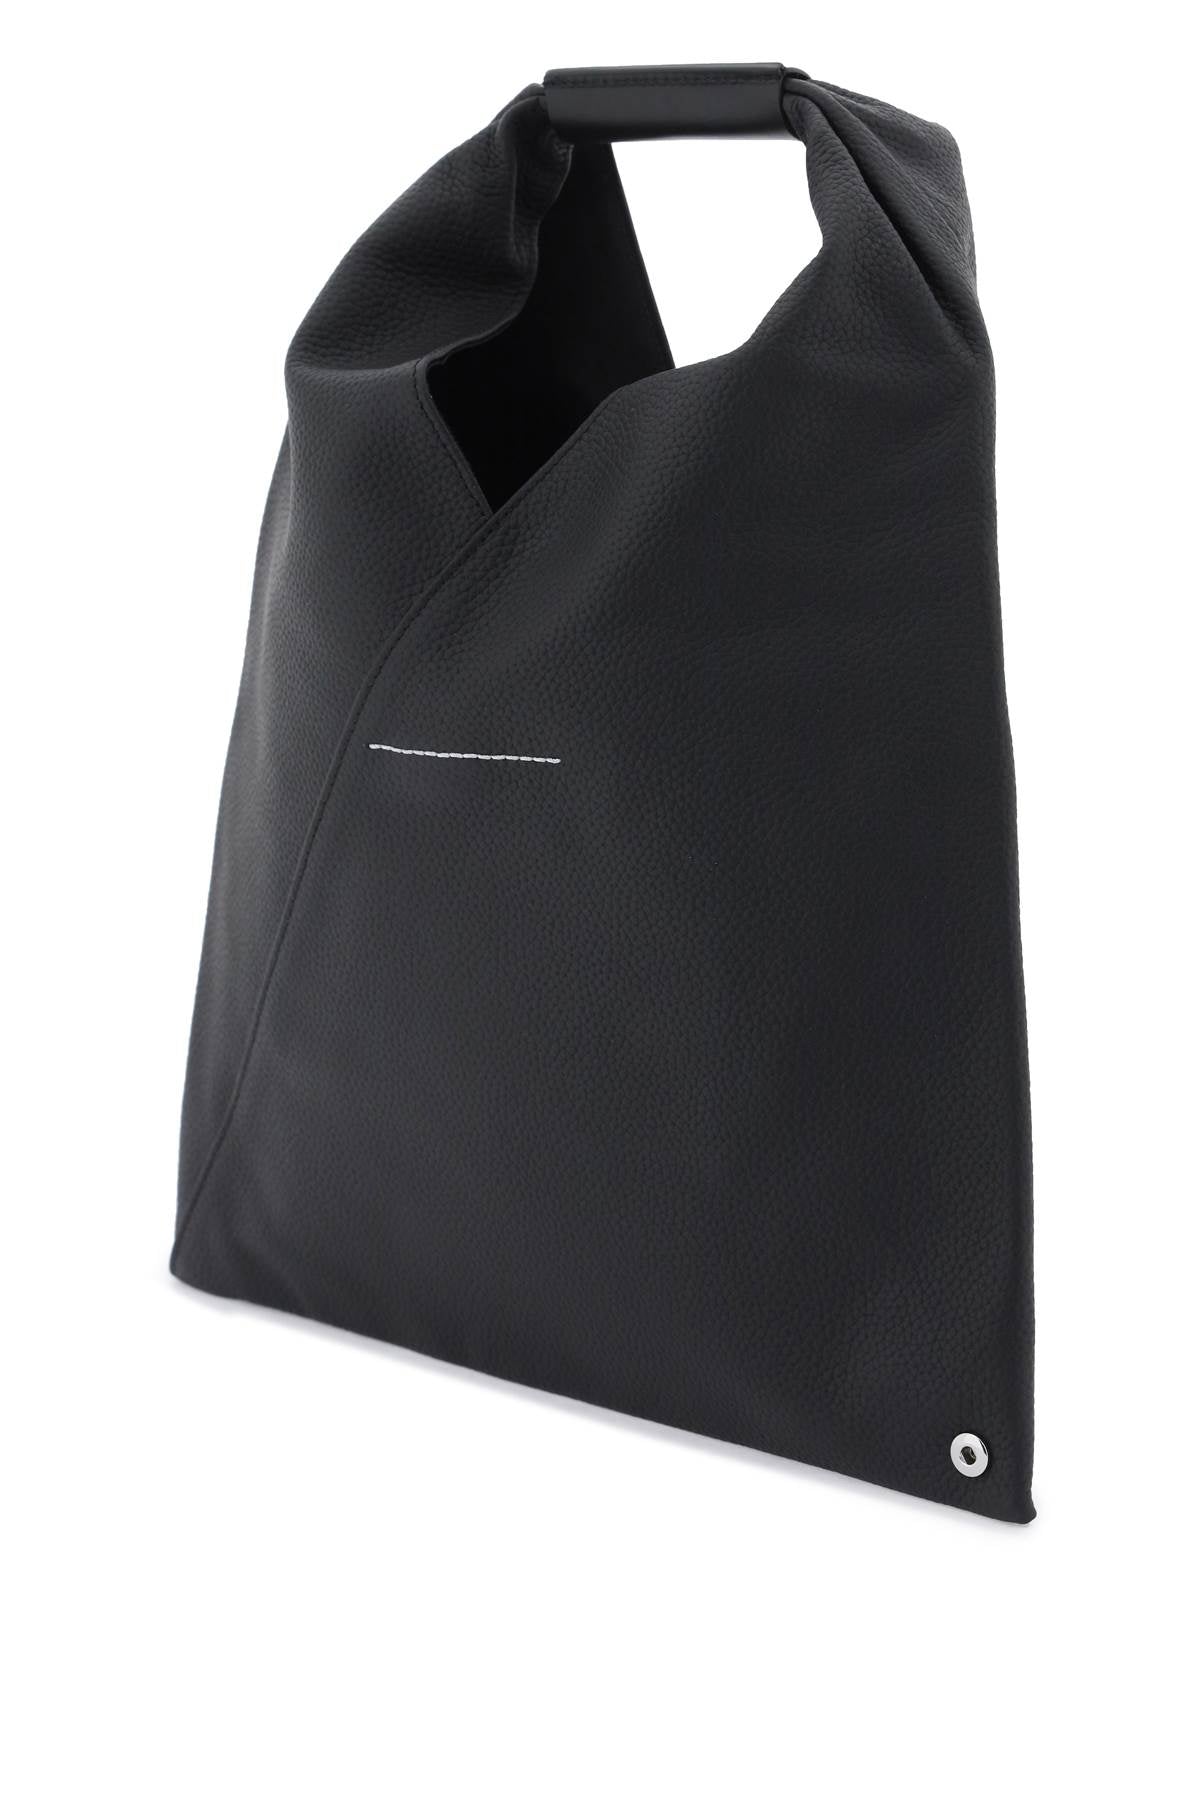 Japanese Grained Leather Handbag with Signature Stitching and Adjustable Shape